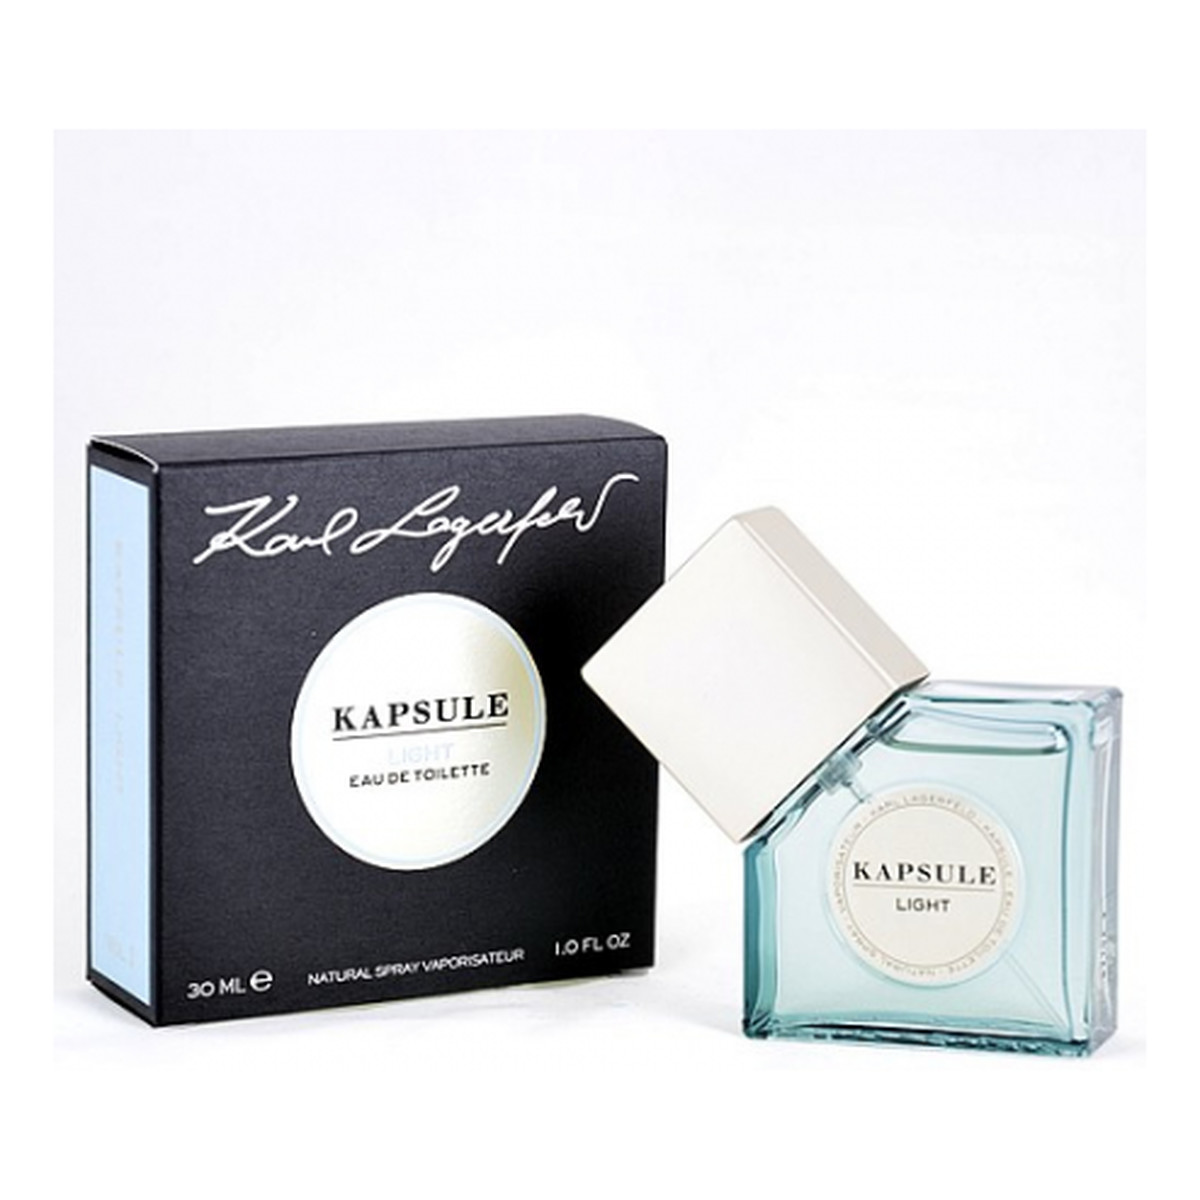 Karl Lagerfeld Kapsule Light Woda toaletowa spray 30ml